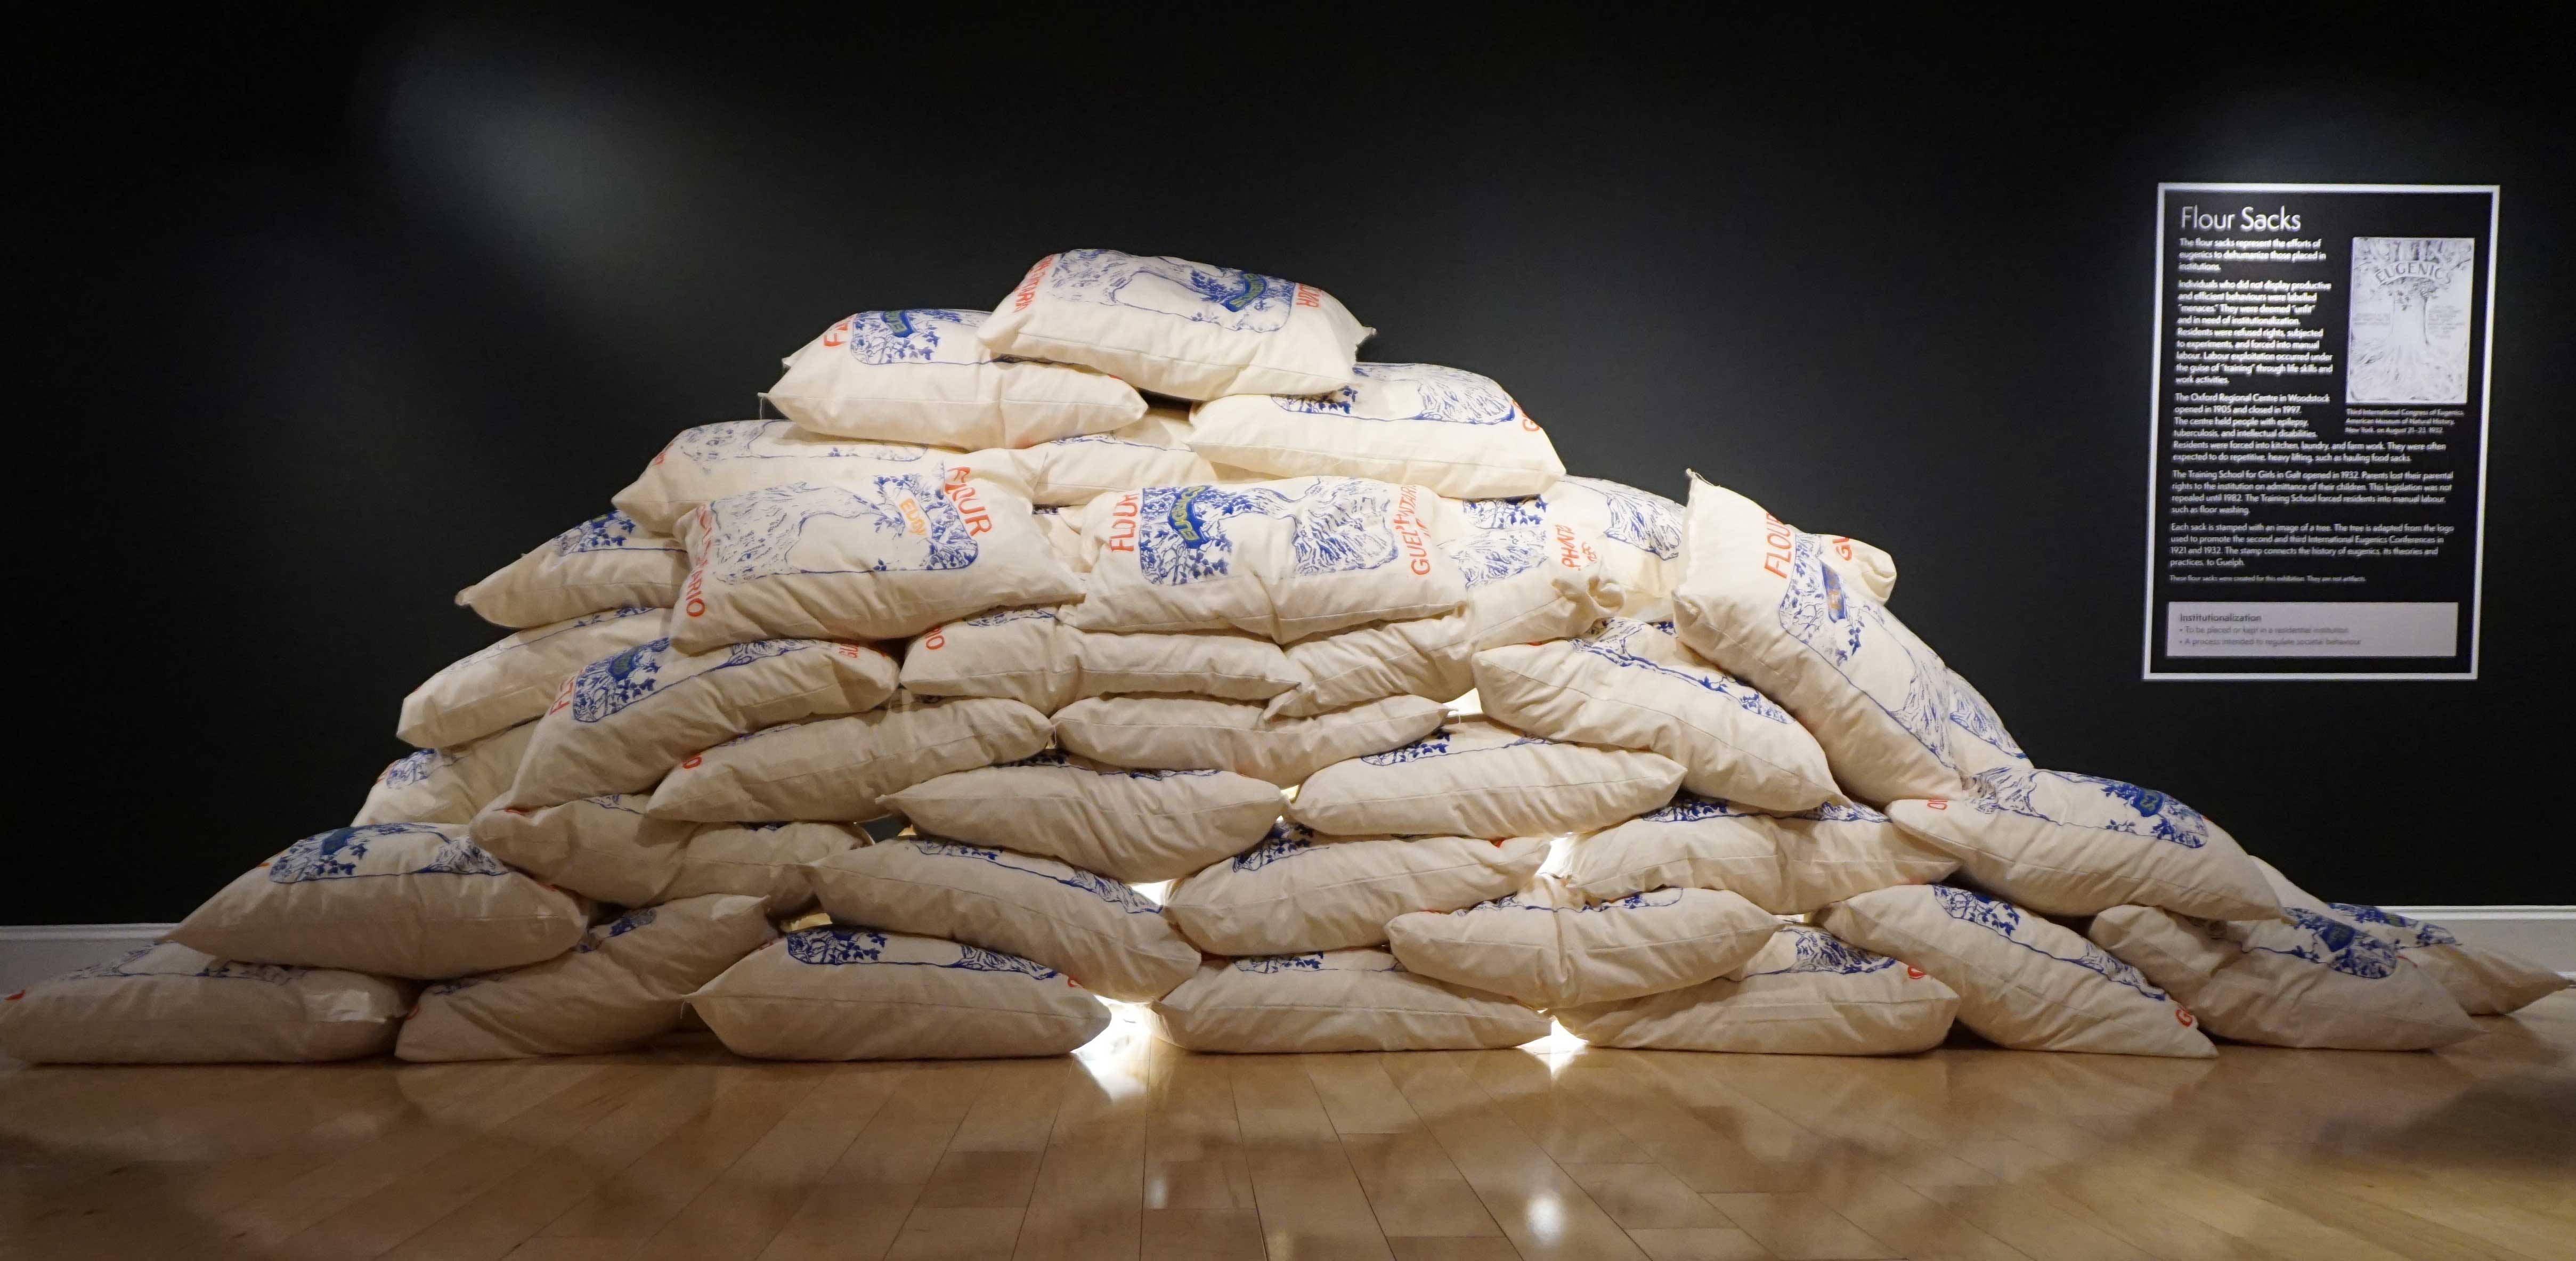 A pile of flour sacks in an exhibit